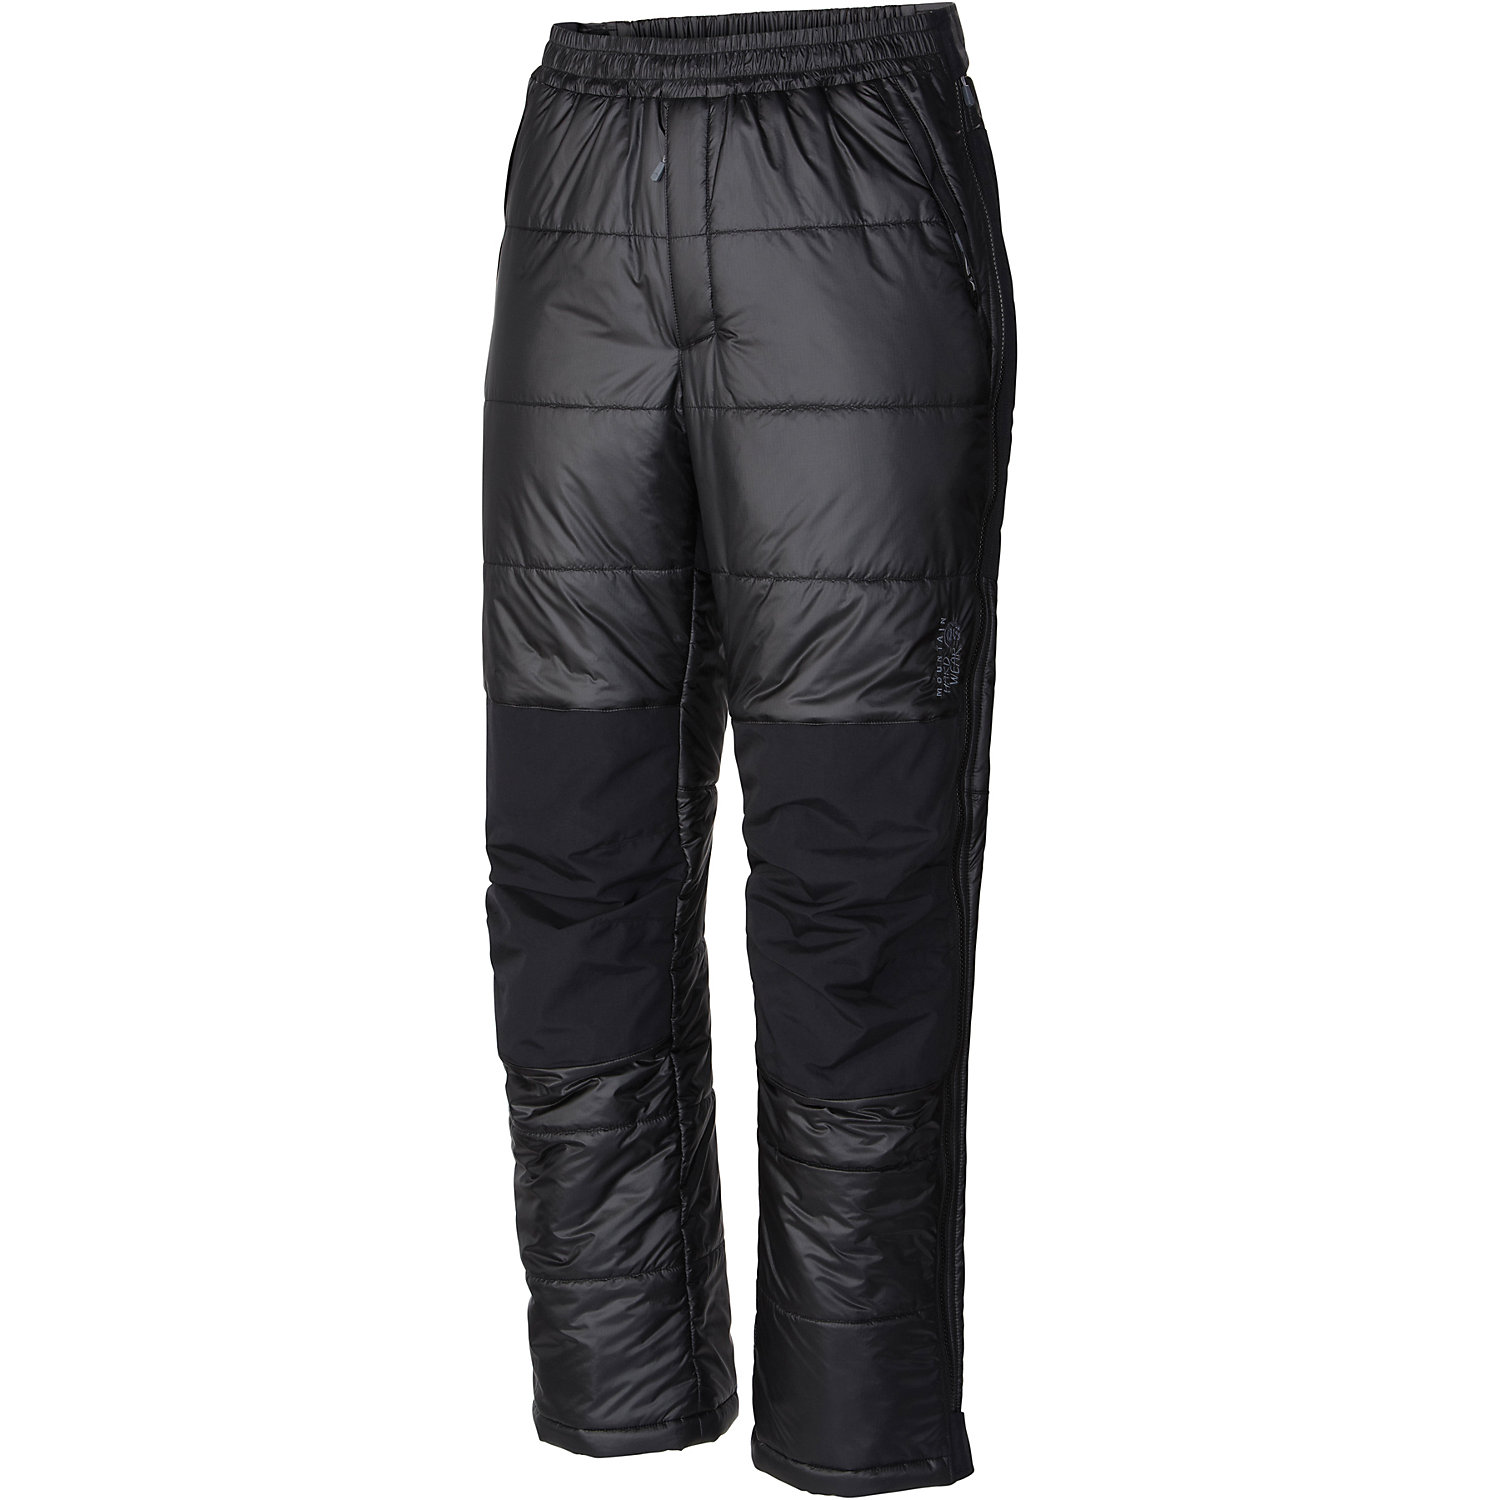 Mountain Hardwear Men's Compressor Pant - Small Regular, Black